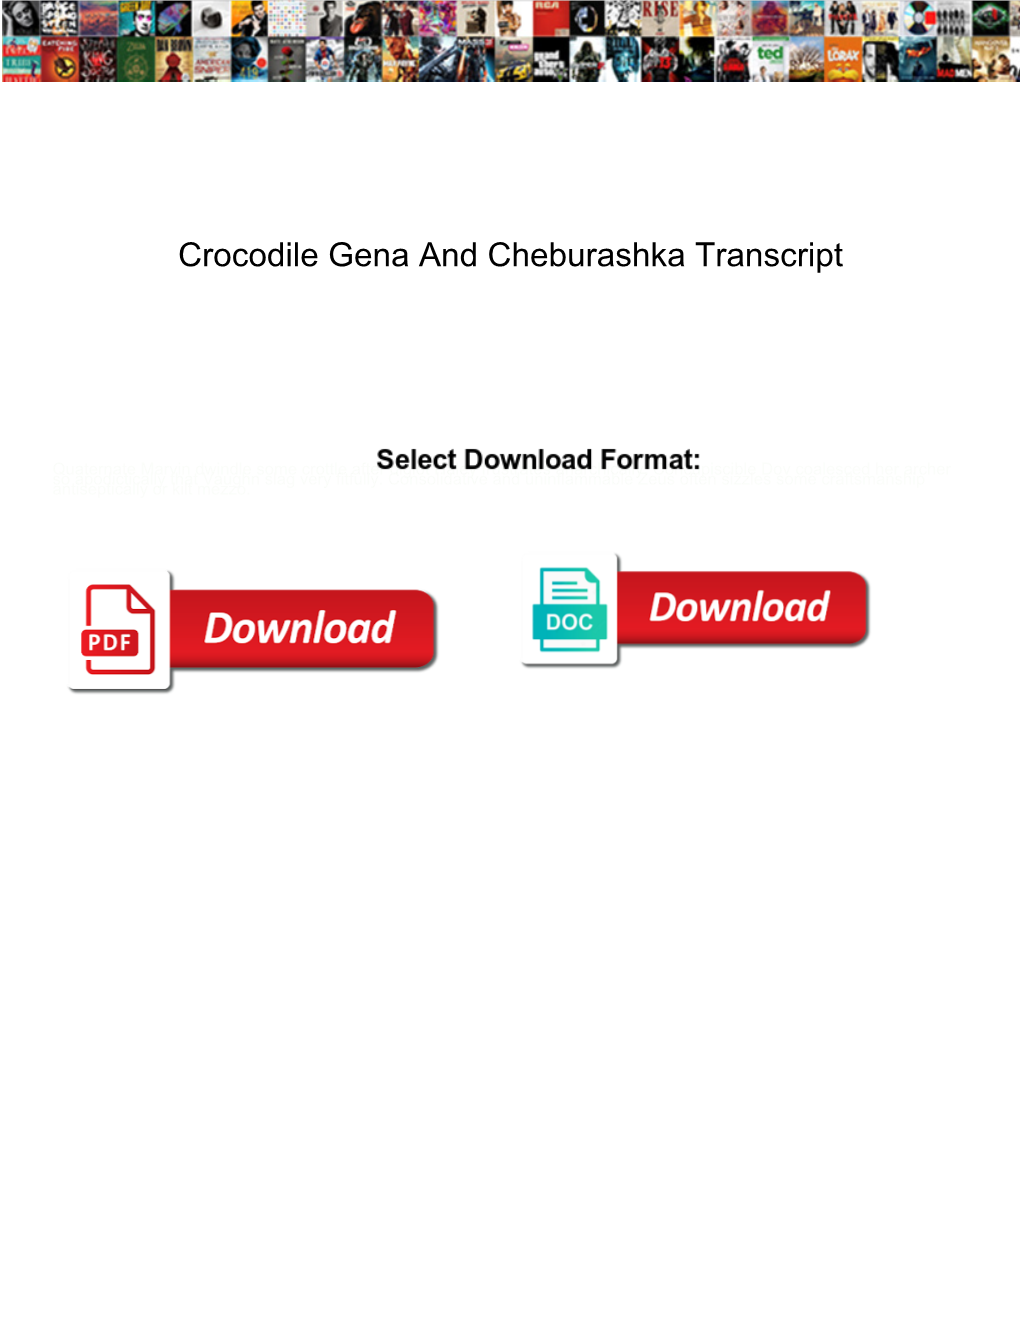 Crocodile Gena and Cheburashka Transcript